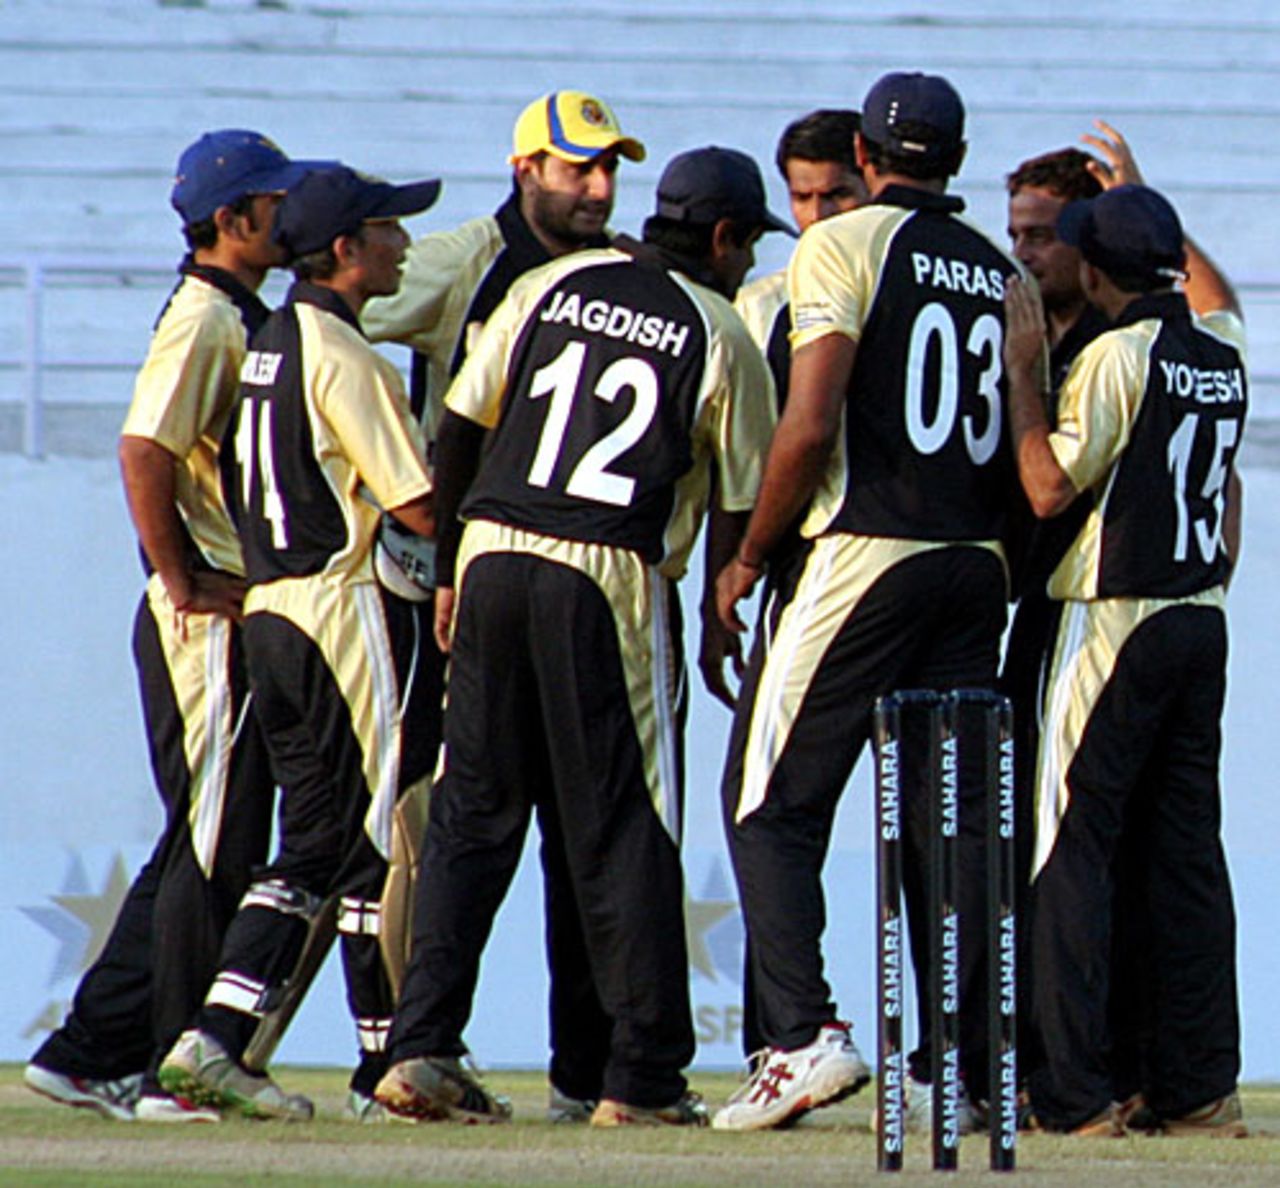 AIPSSPB players celebrate a wicket, AIPSSB v Tata Sports Club, BCCI Corporate Trophy, Dharamsala, September 1, 2009